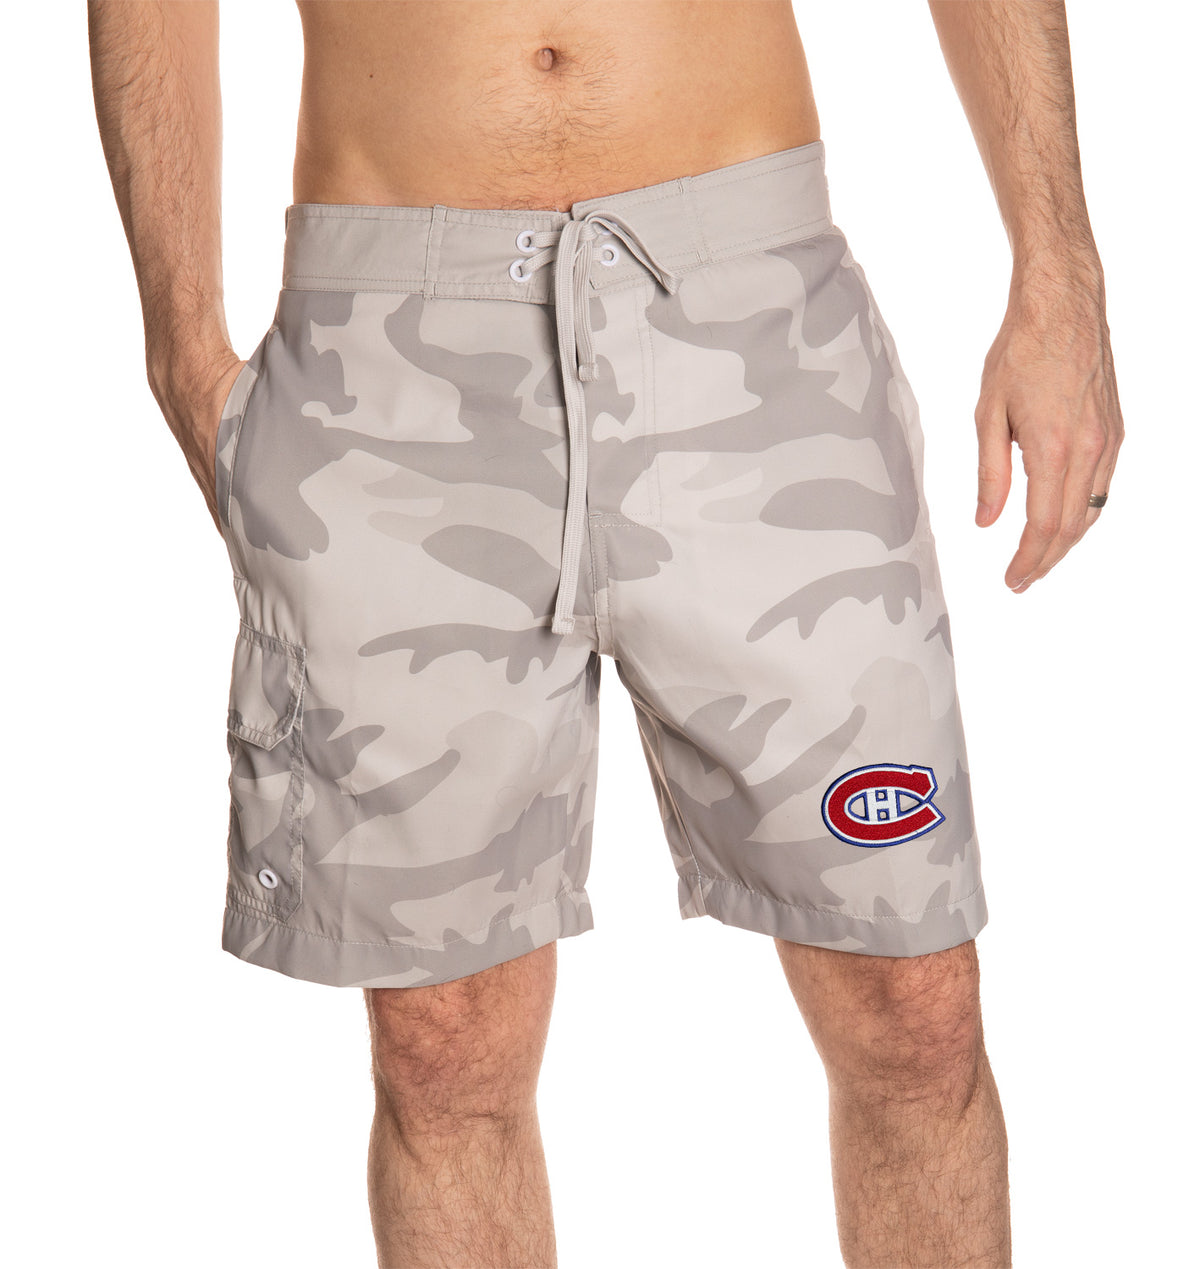 Montreal Canadiens Camo Boardshorts for Men